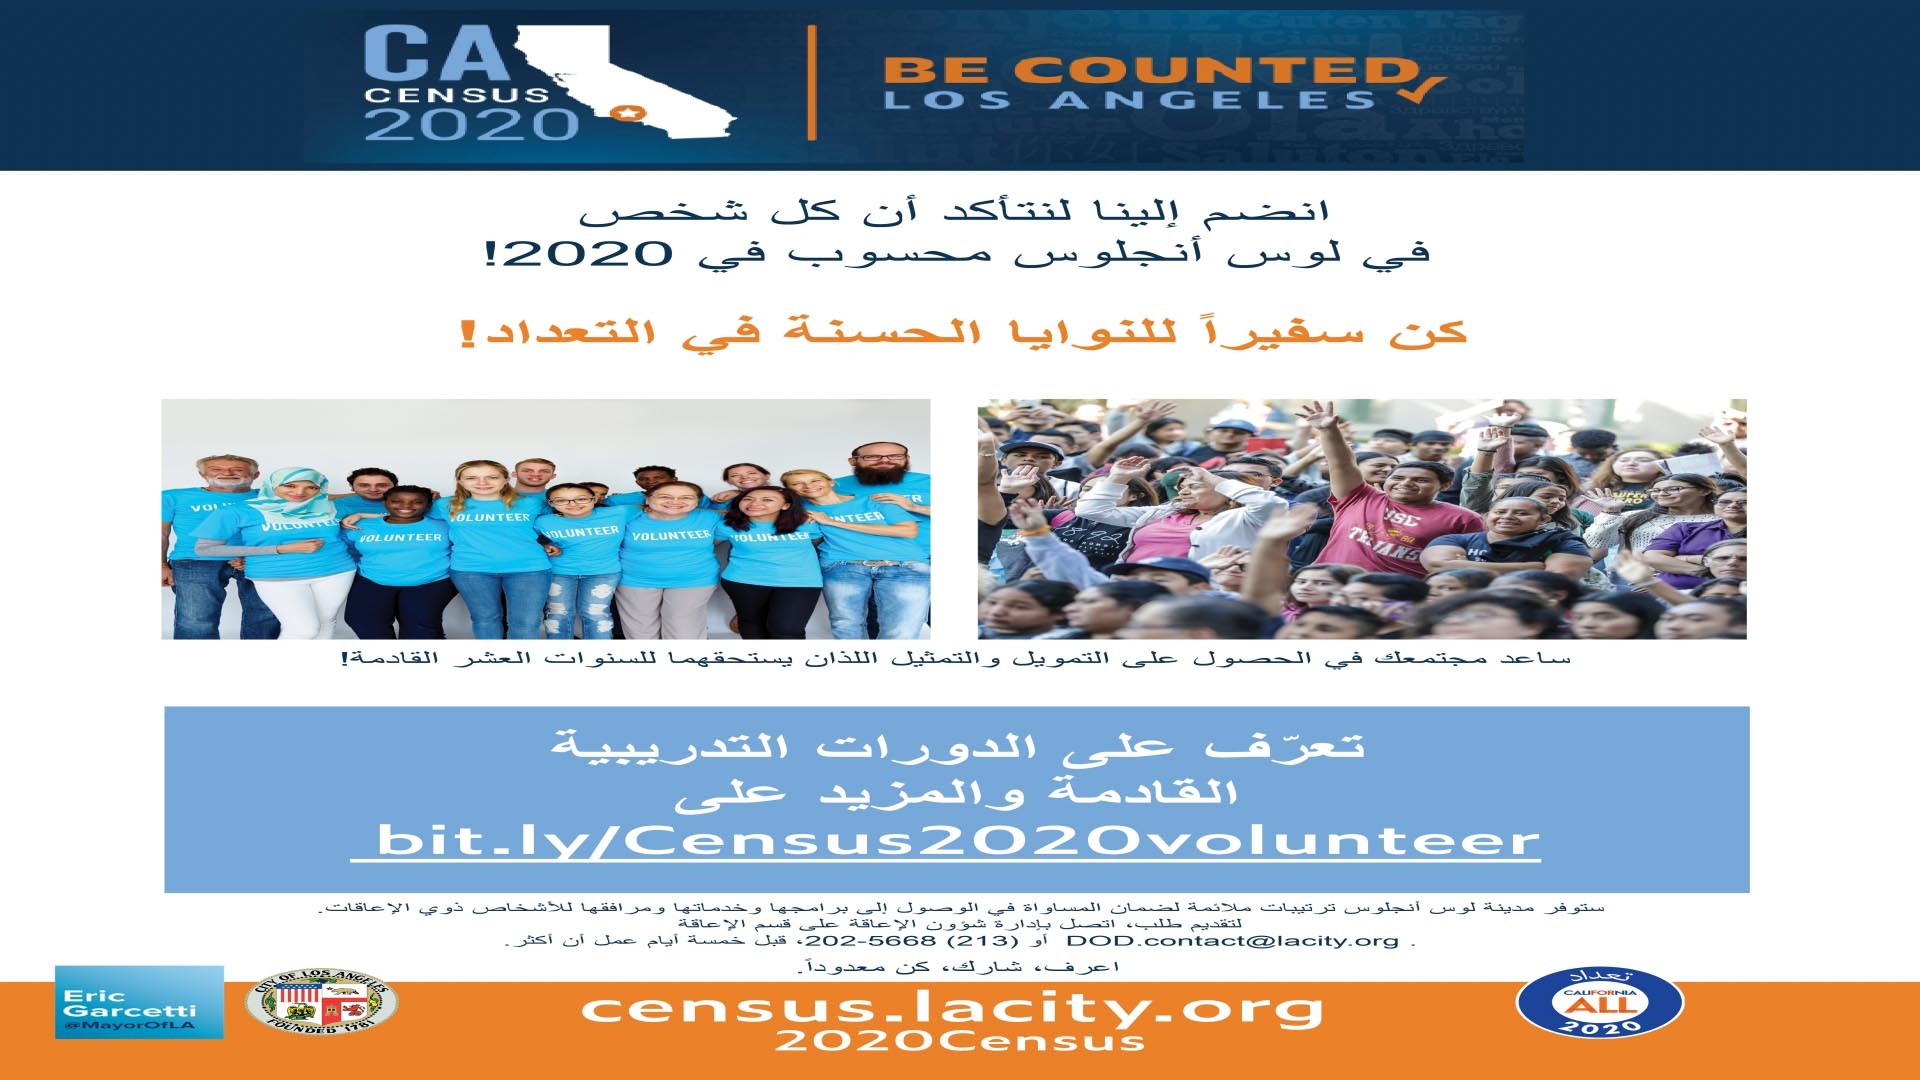 Census Goodwill Ambassador flyer in Arabic.